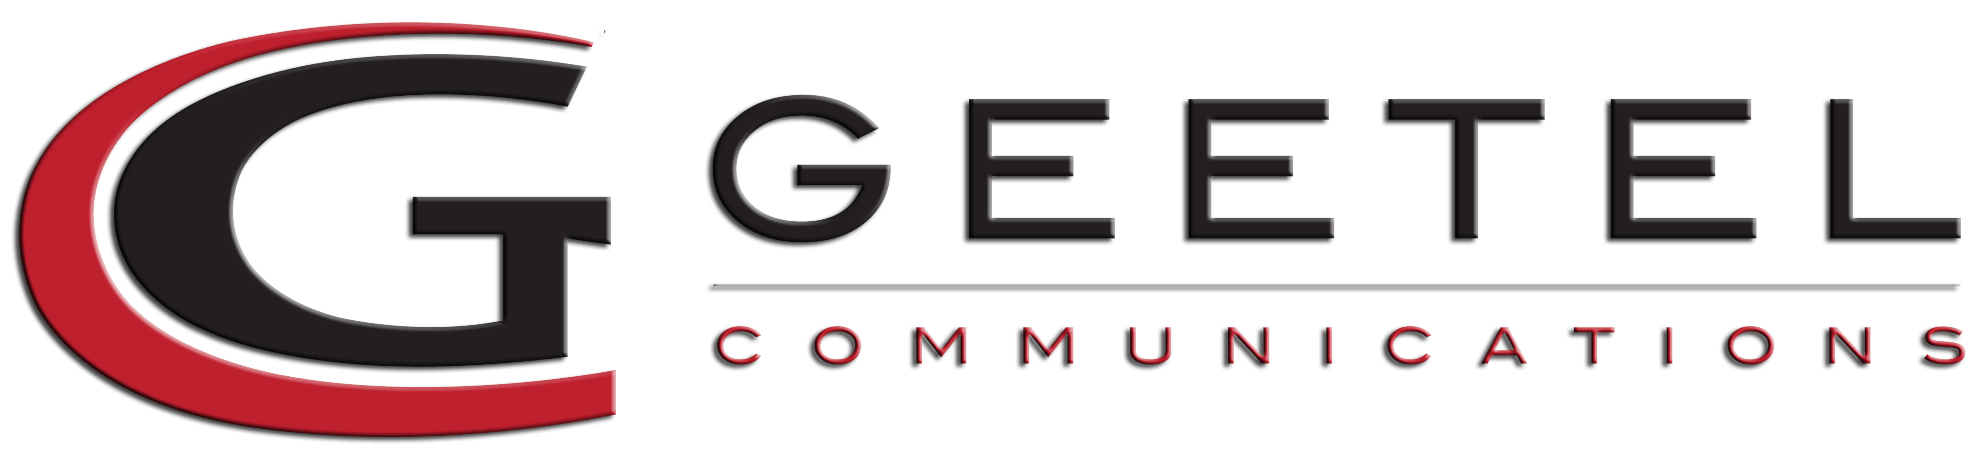 Telephone Company Logo - Geetingsville Telephone Company - Geetingsville Telephone Company